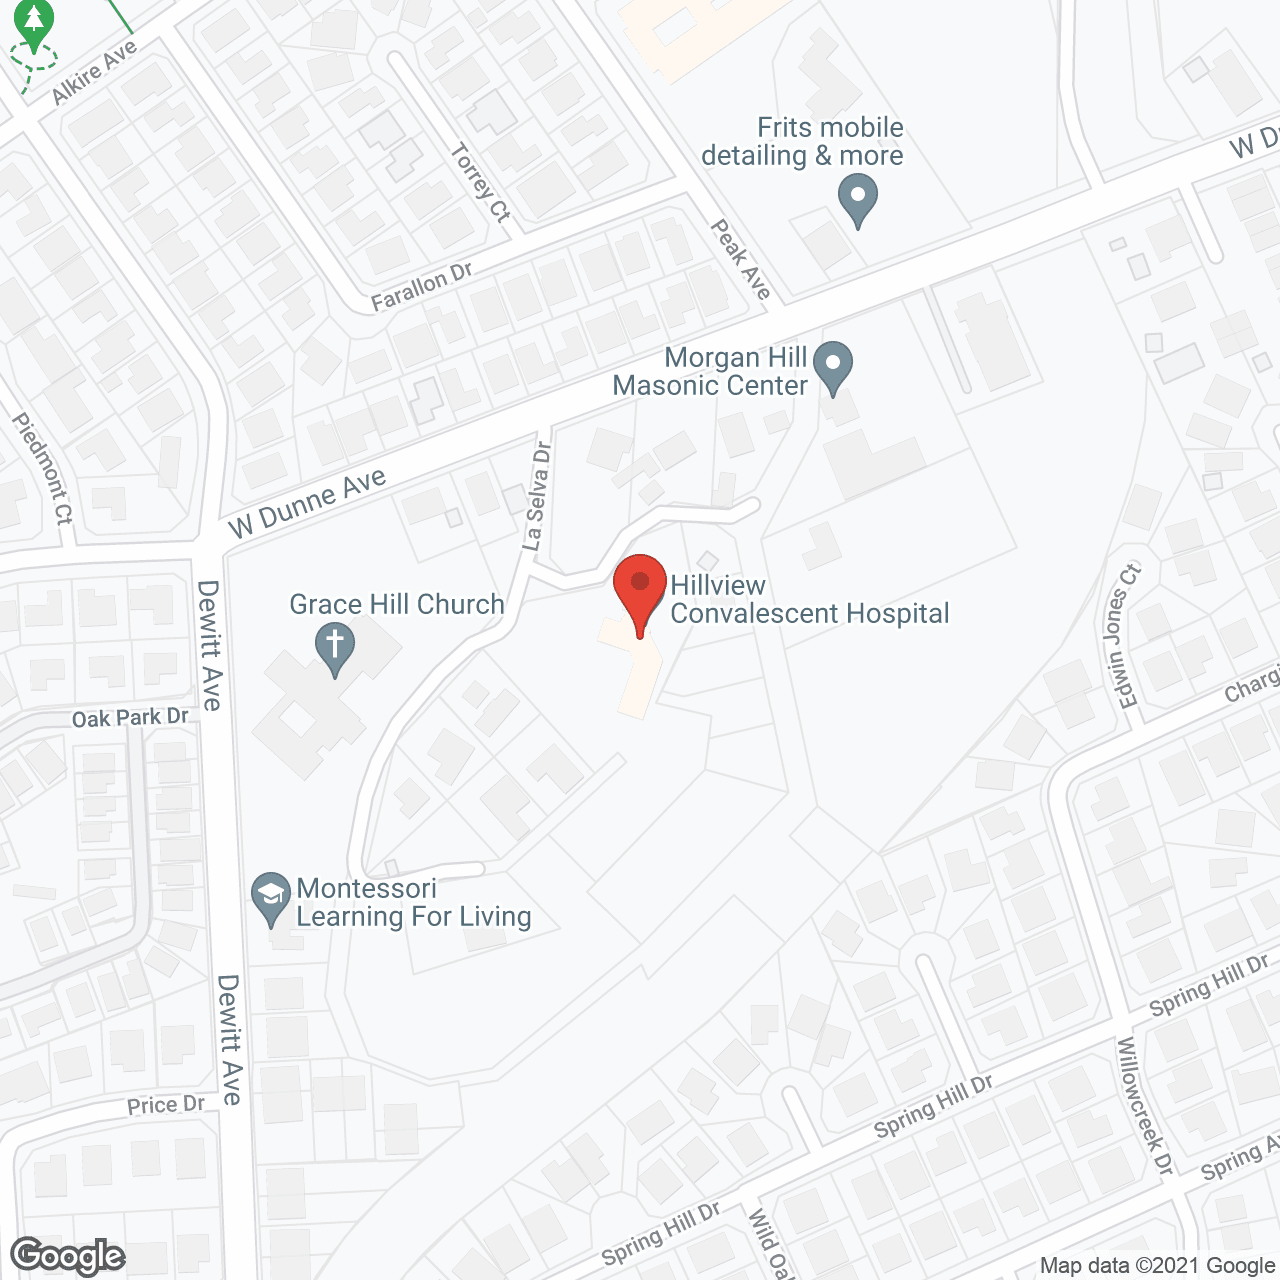 Morgan Hill Healthcare Center in google map